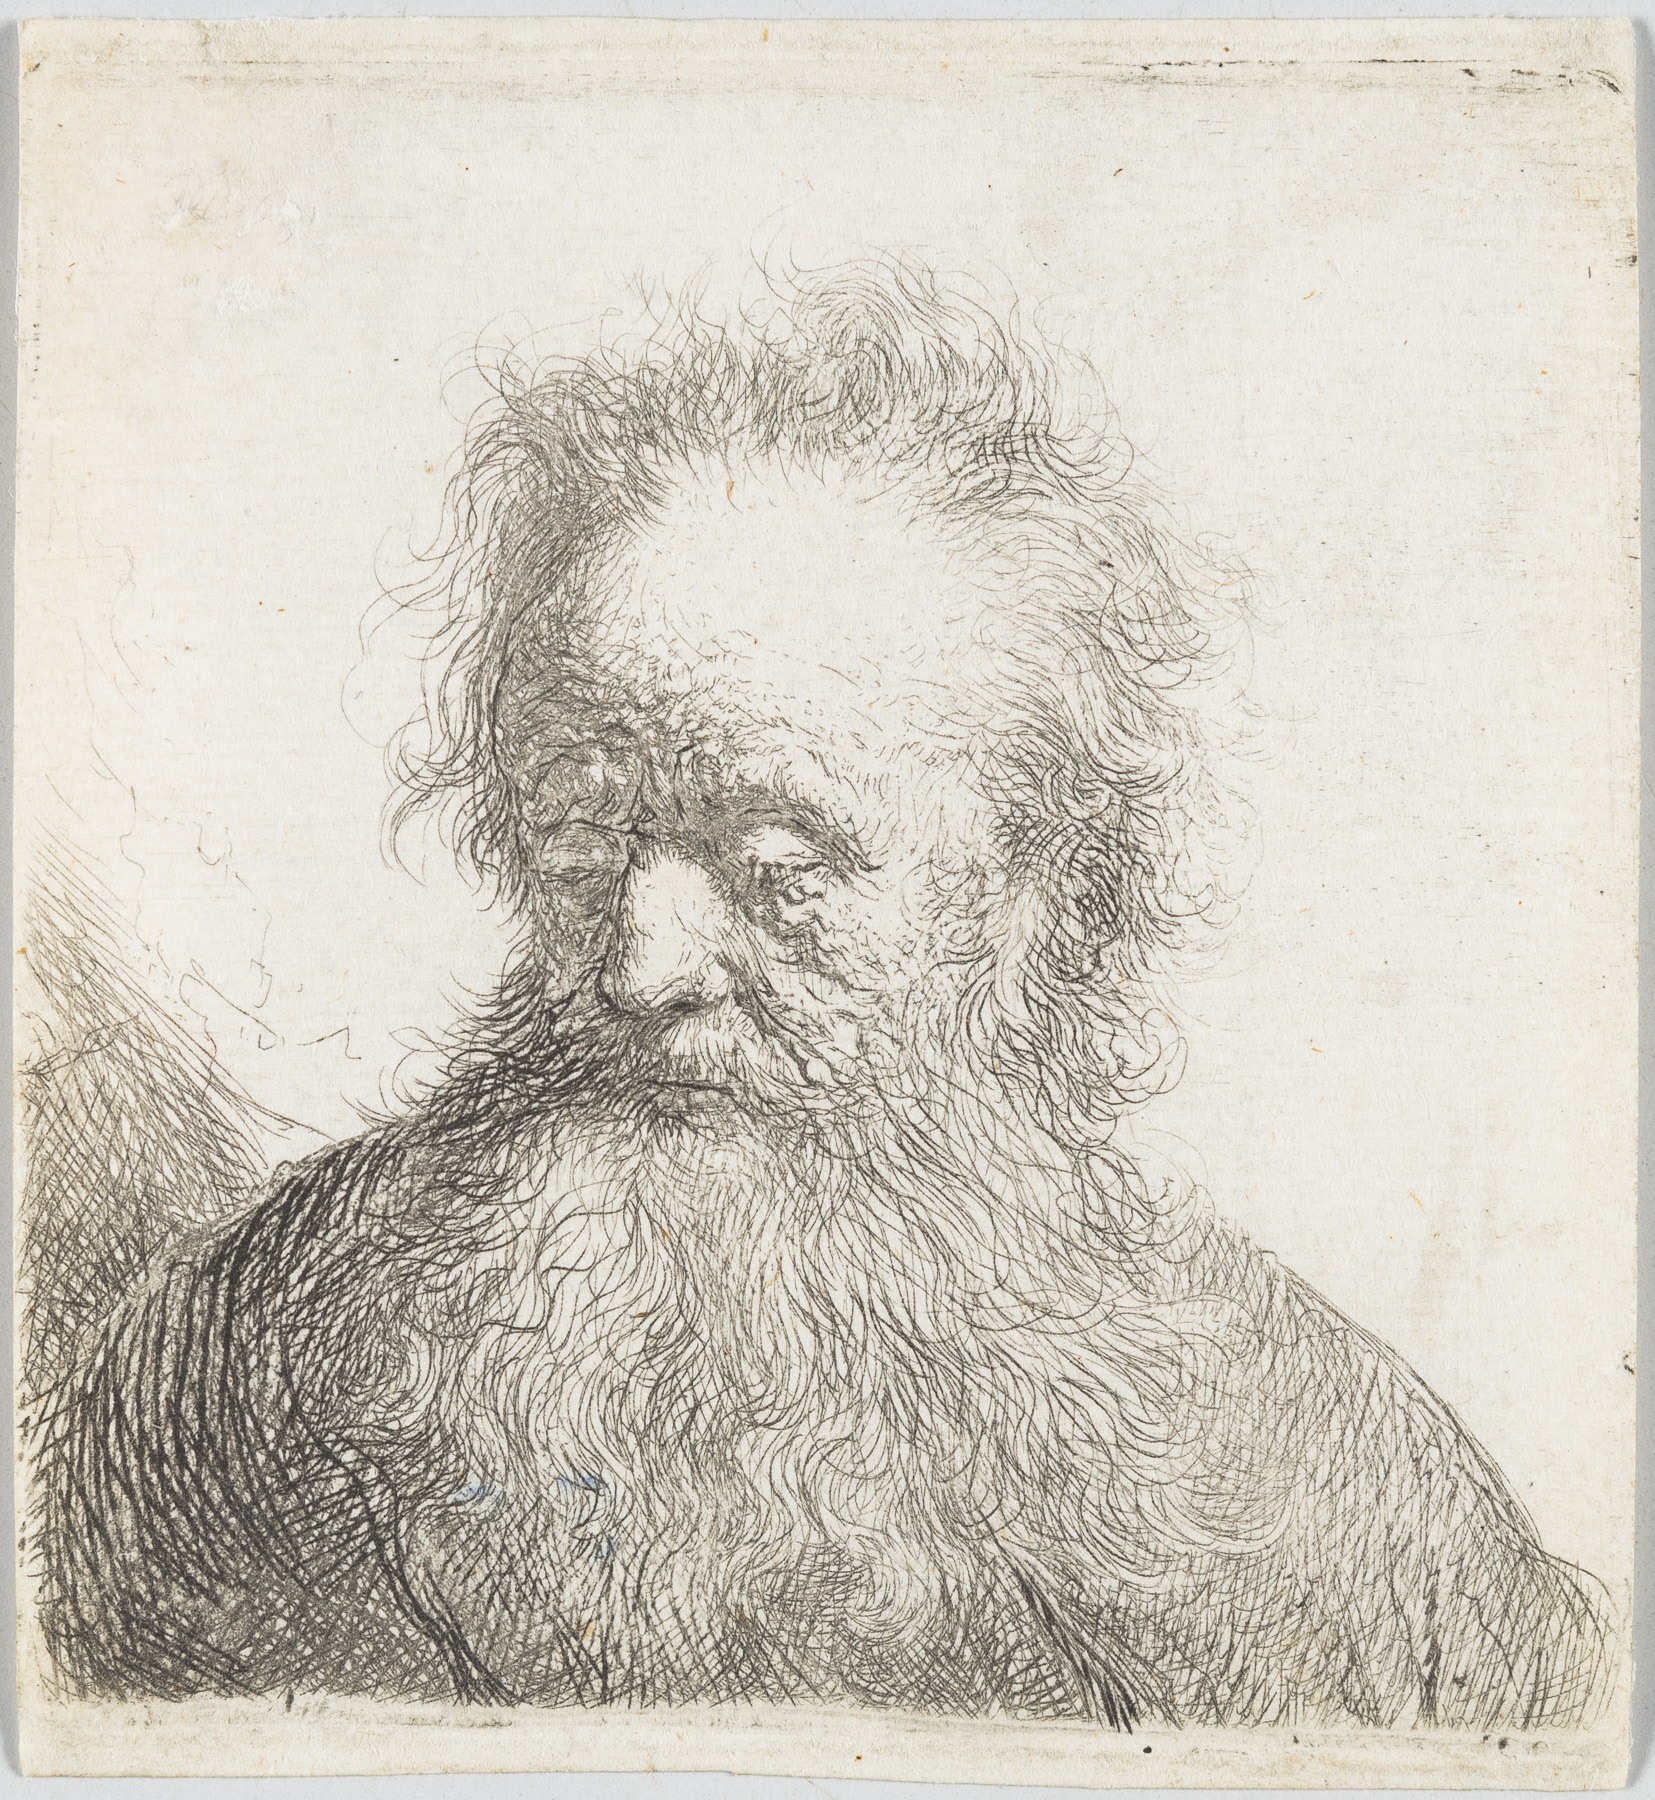 https://clarkfineart.com/wp-content/uploads/2020/04/28108_Rembrandt_b315ii_Old-Man-Flowing-Beard.jpg